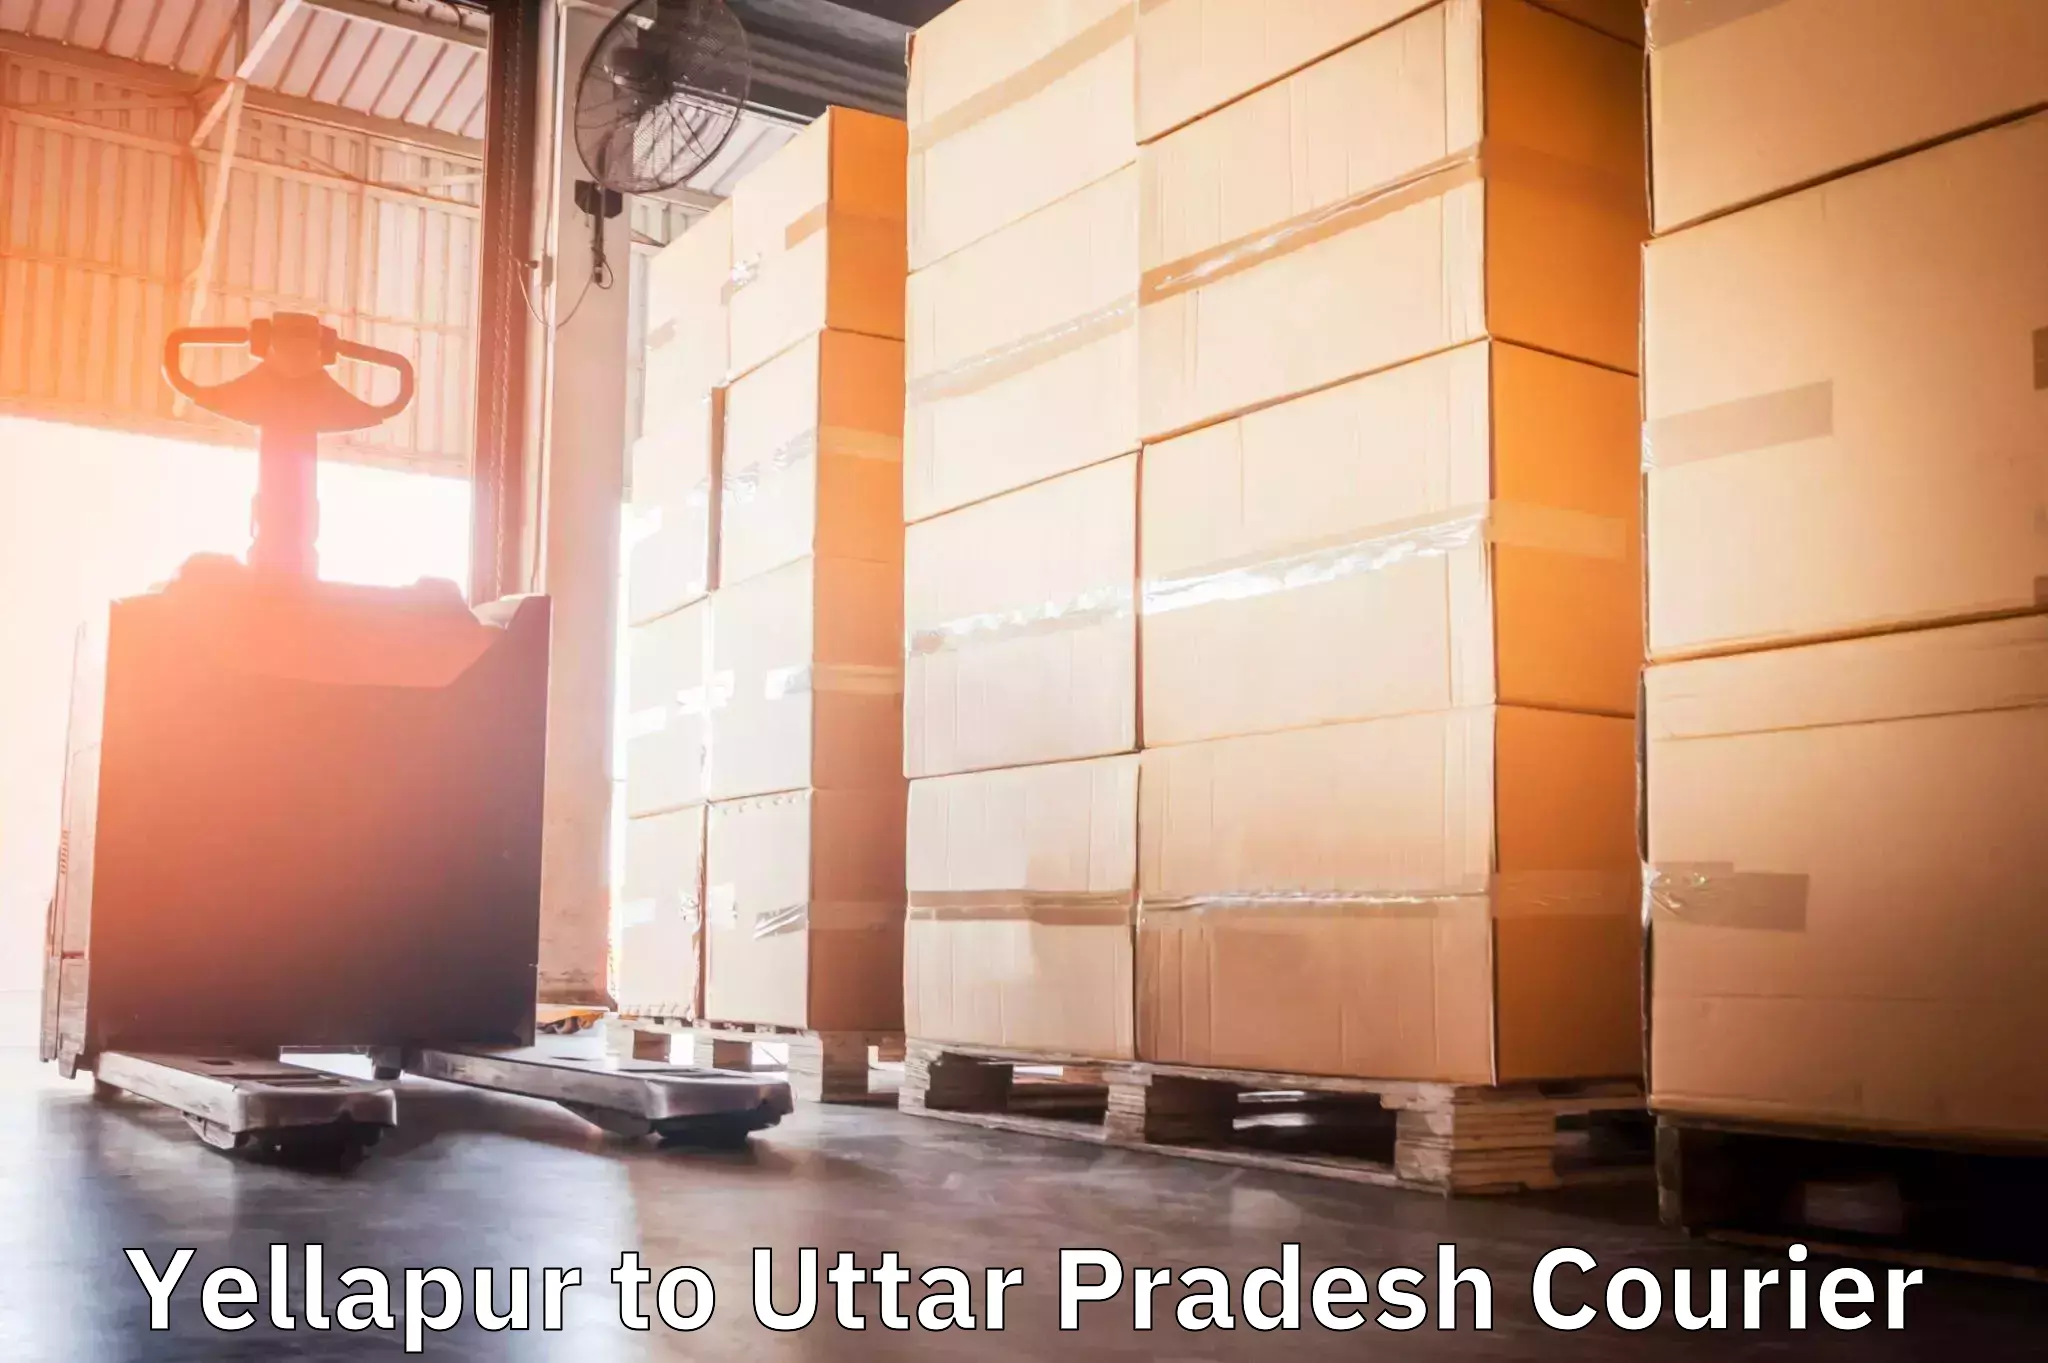 Courier service comparison in Yellapur to Uttar Pradesh